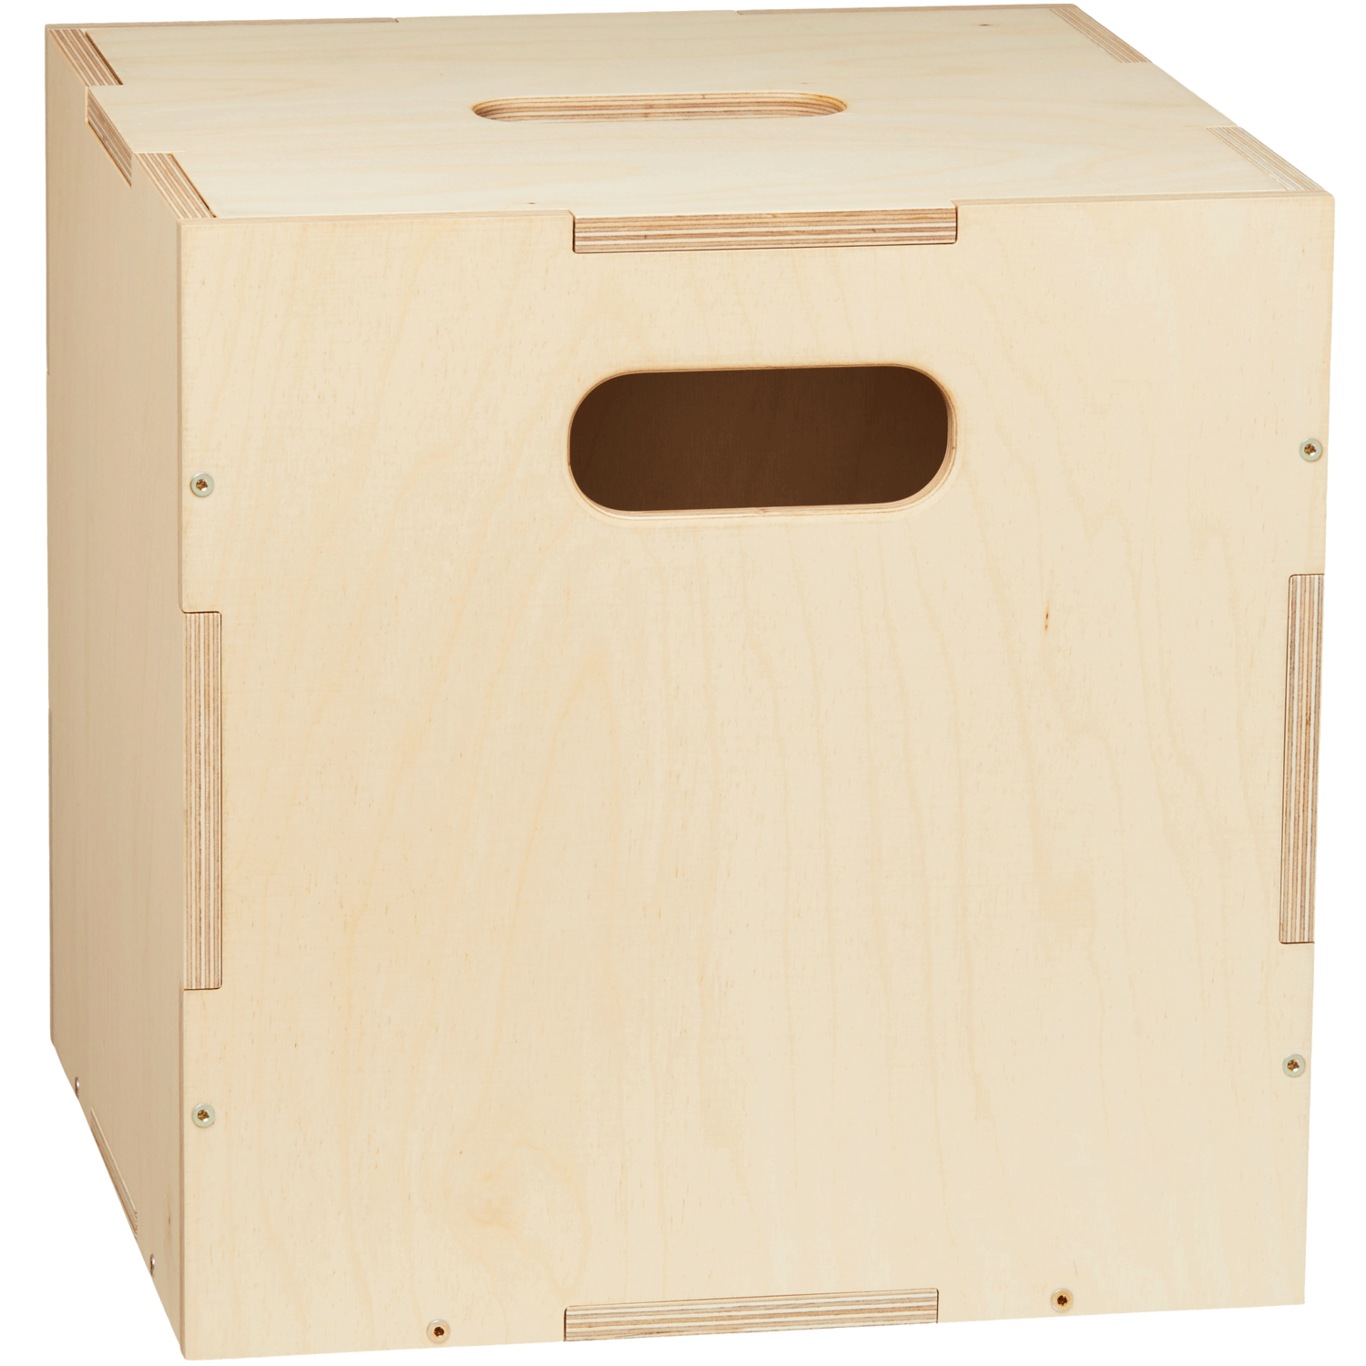 Cube Storage 36x36 cm, Wood